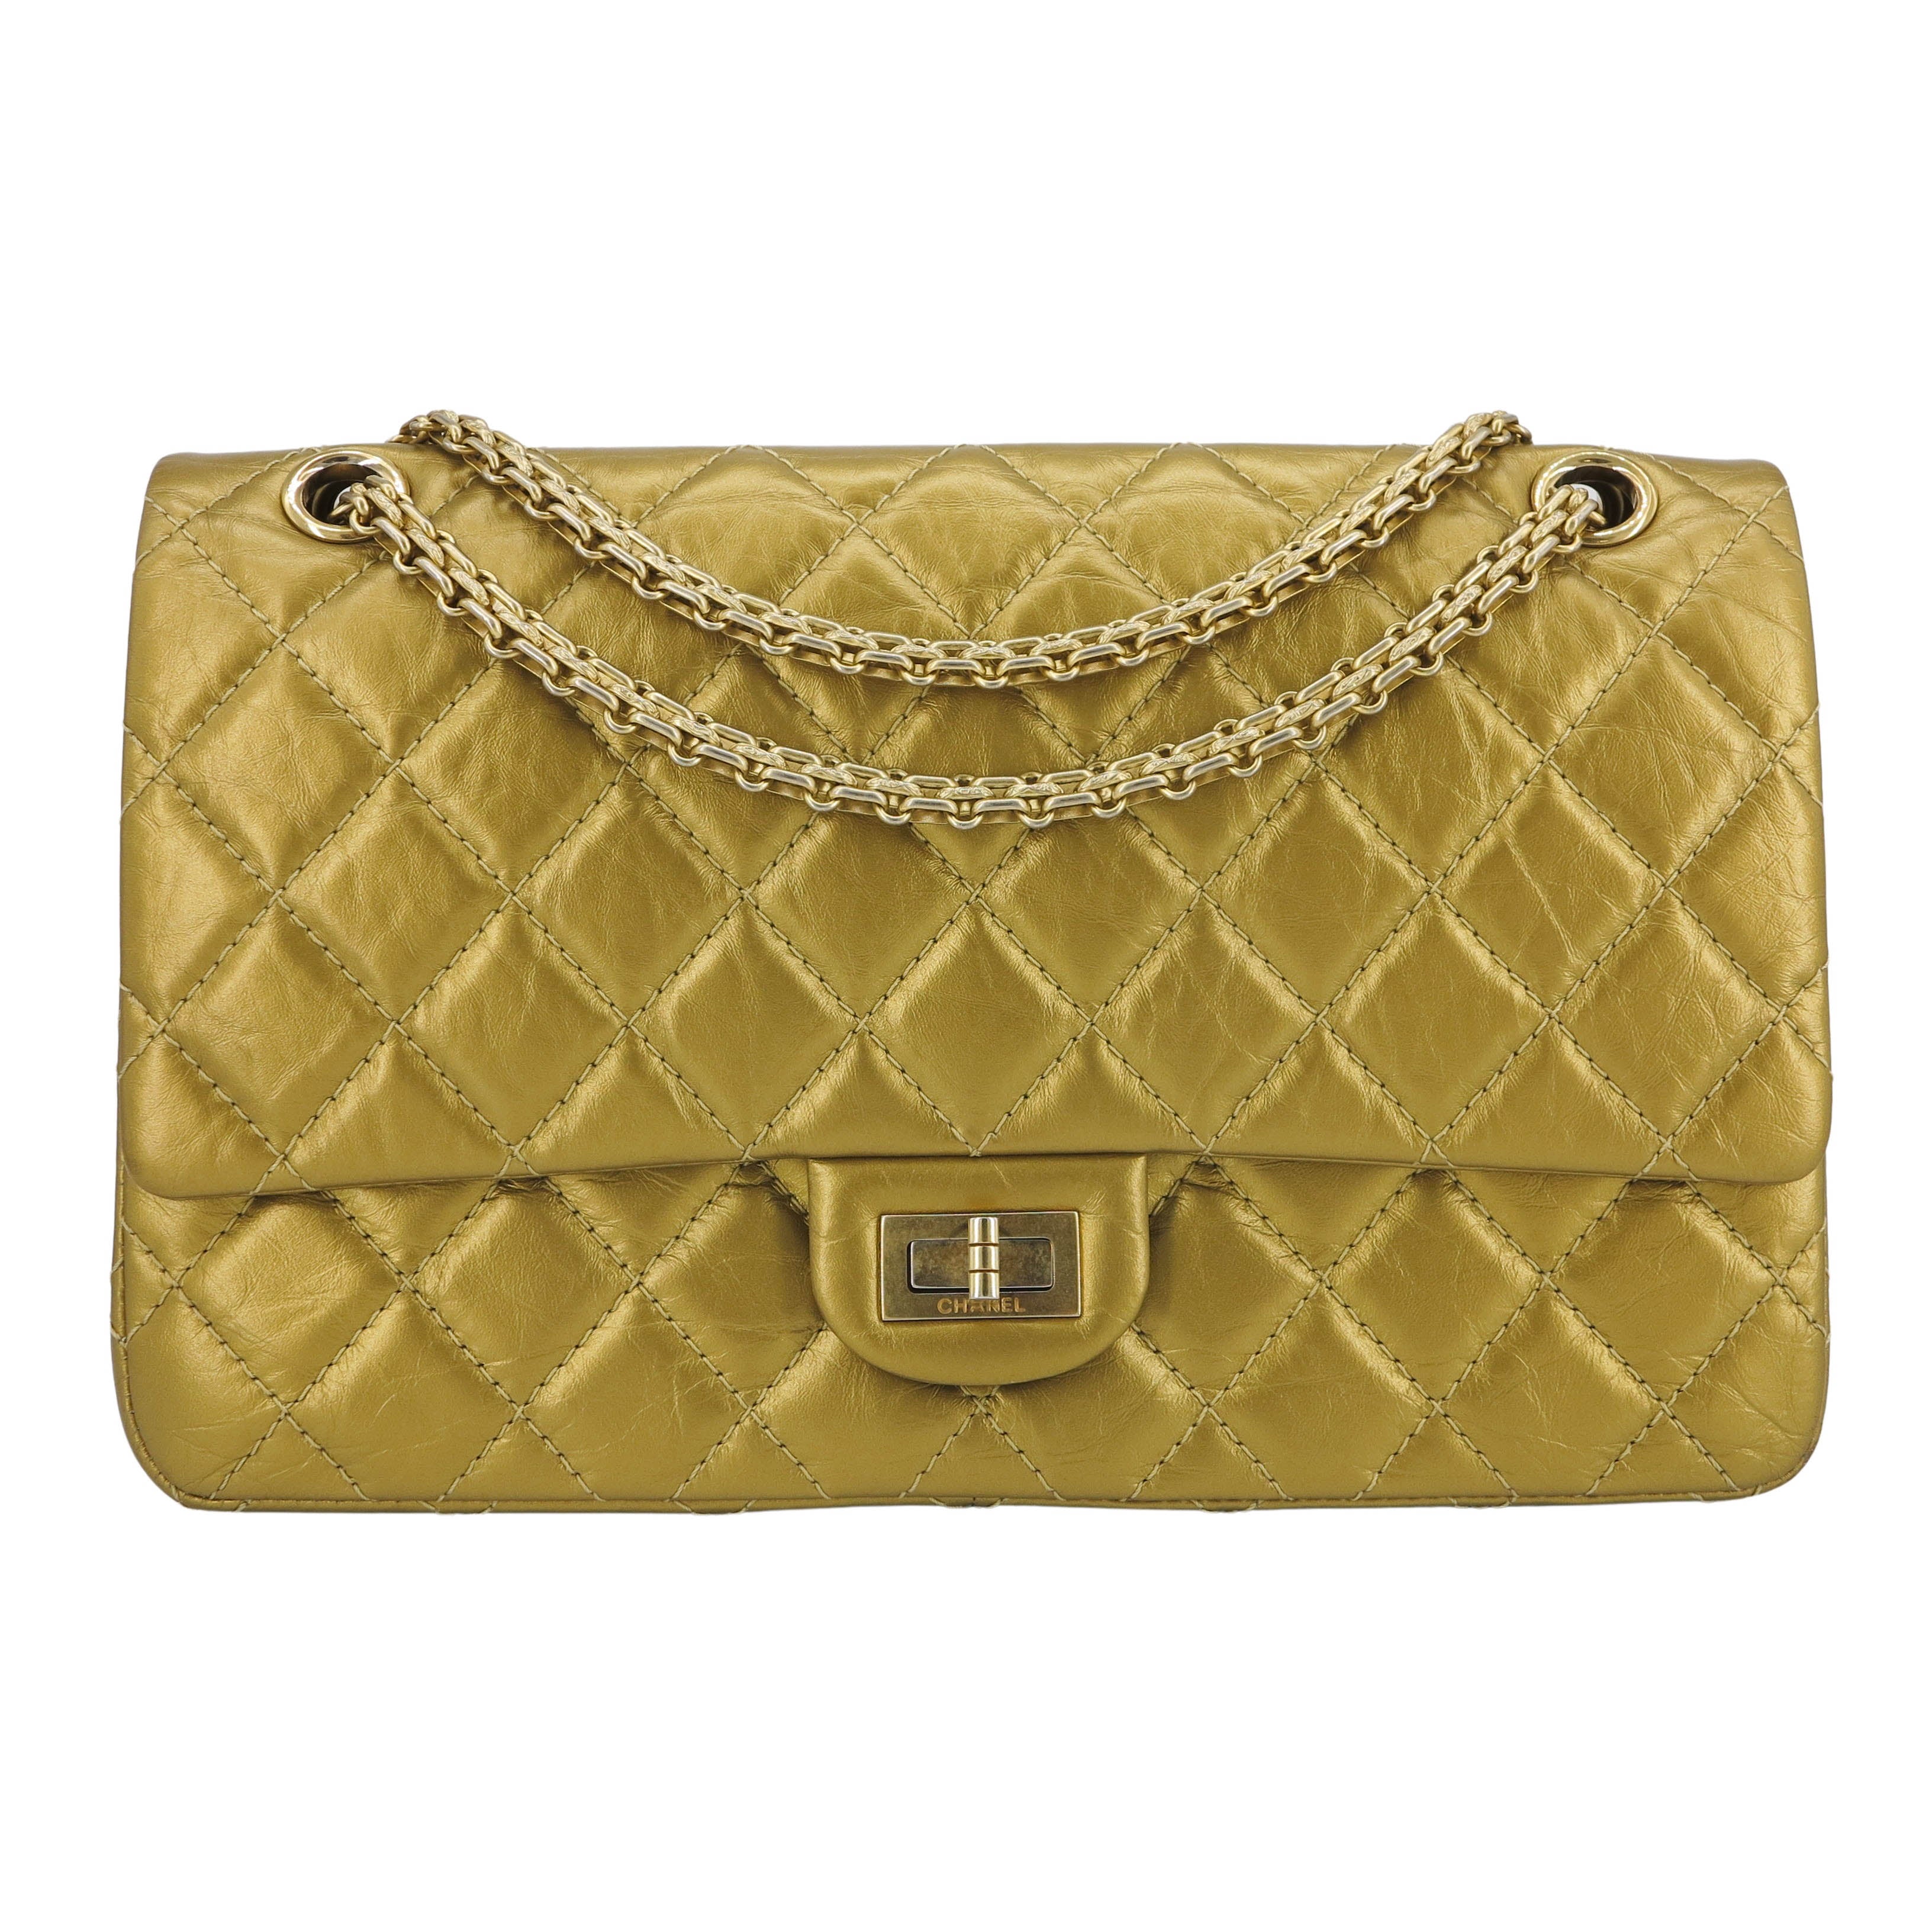 CHANEL 2.55 Classic Flap Bag Size 226 Black Aged Calfskin & Gold-Tone  HW $11000